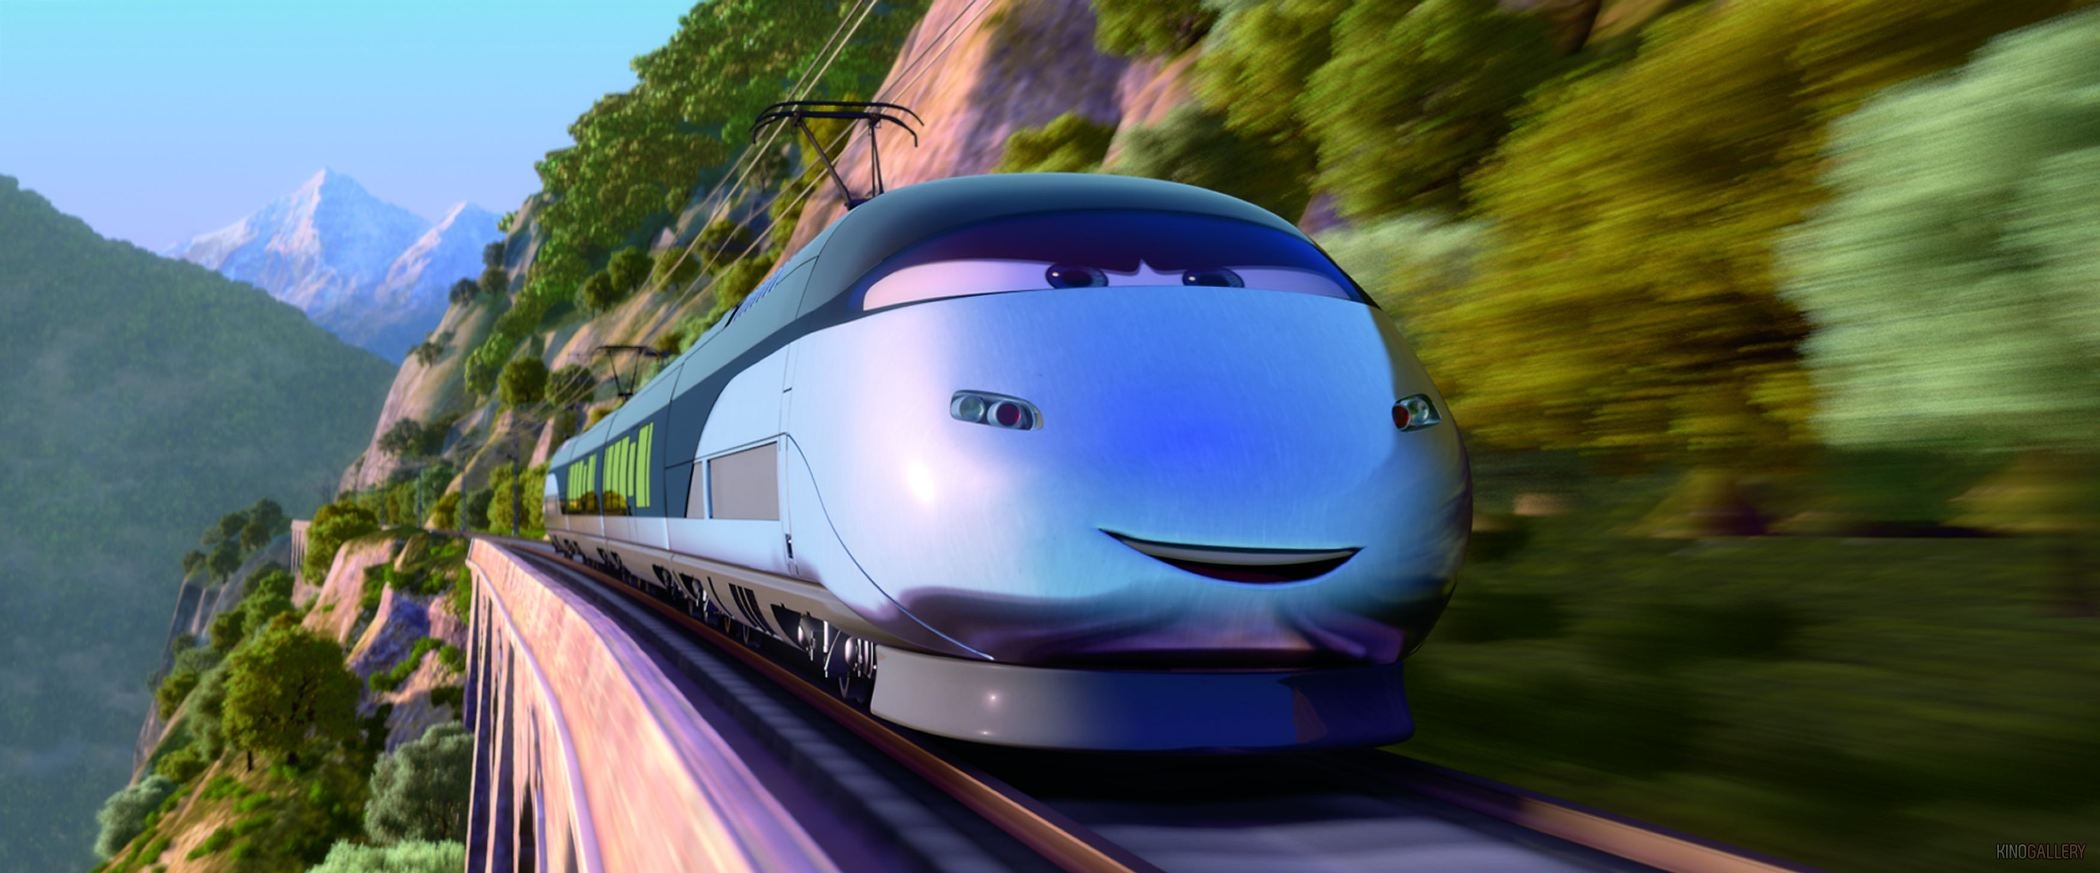 Cars 2 Pics Disney Pixar Cars 2 Desktop Wallpaper Wallpaper Anime